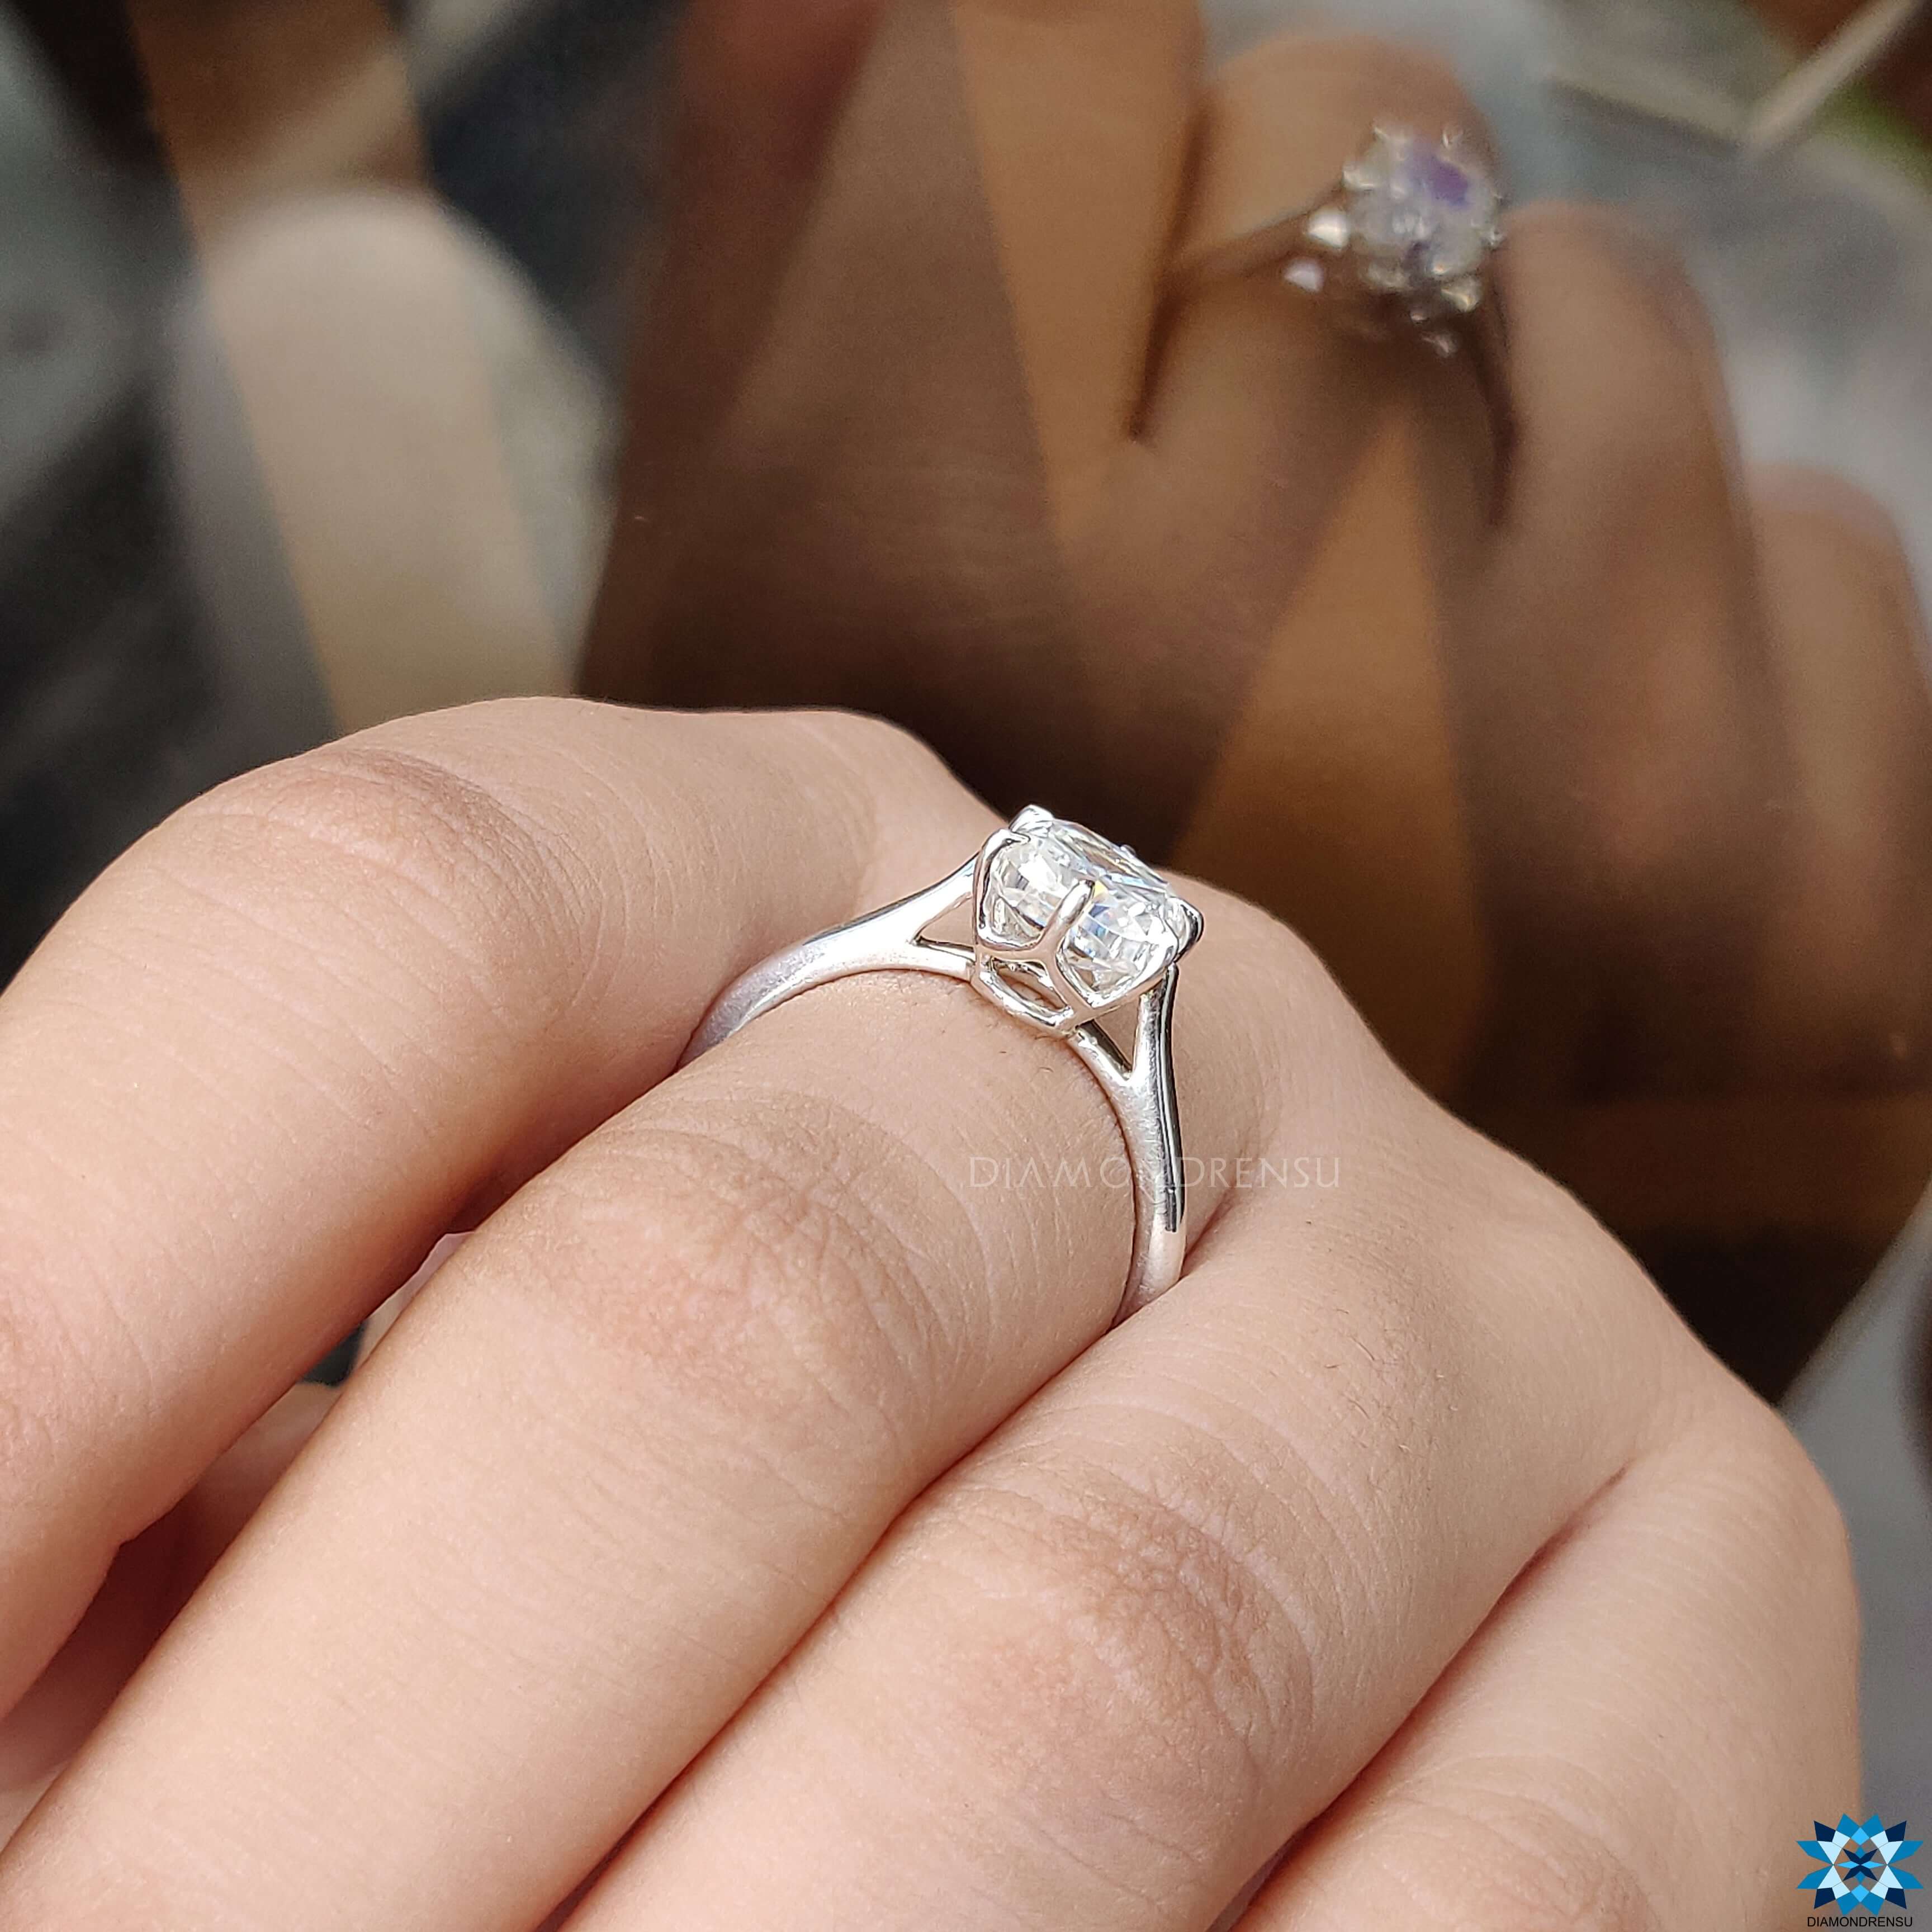 customized engagement ring, diamond ring